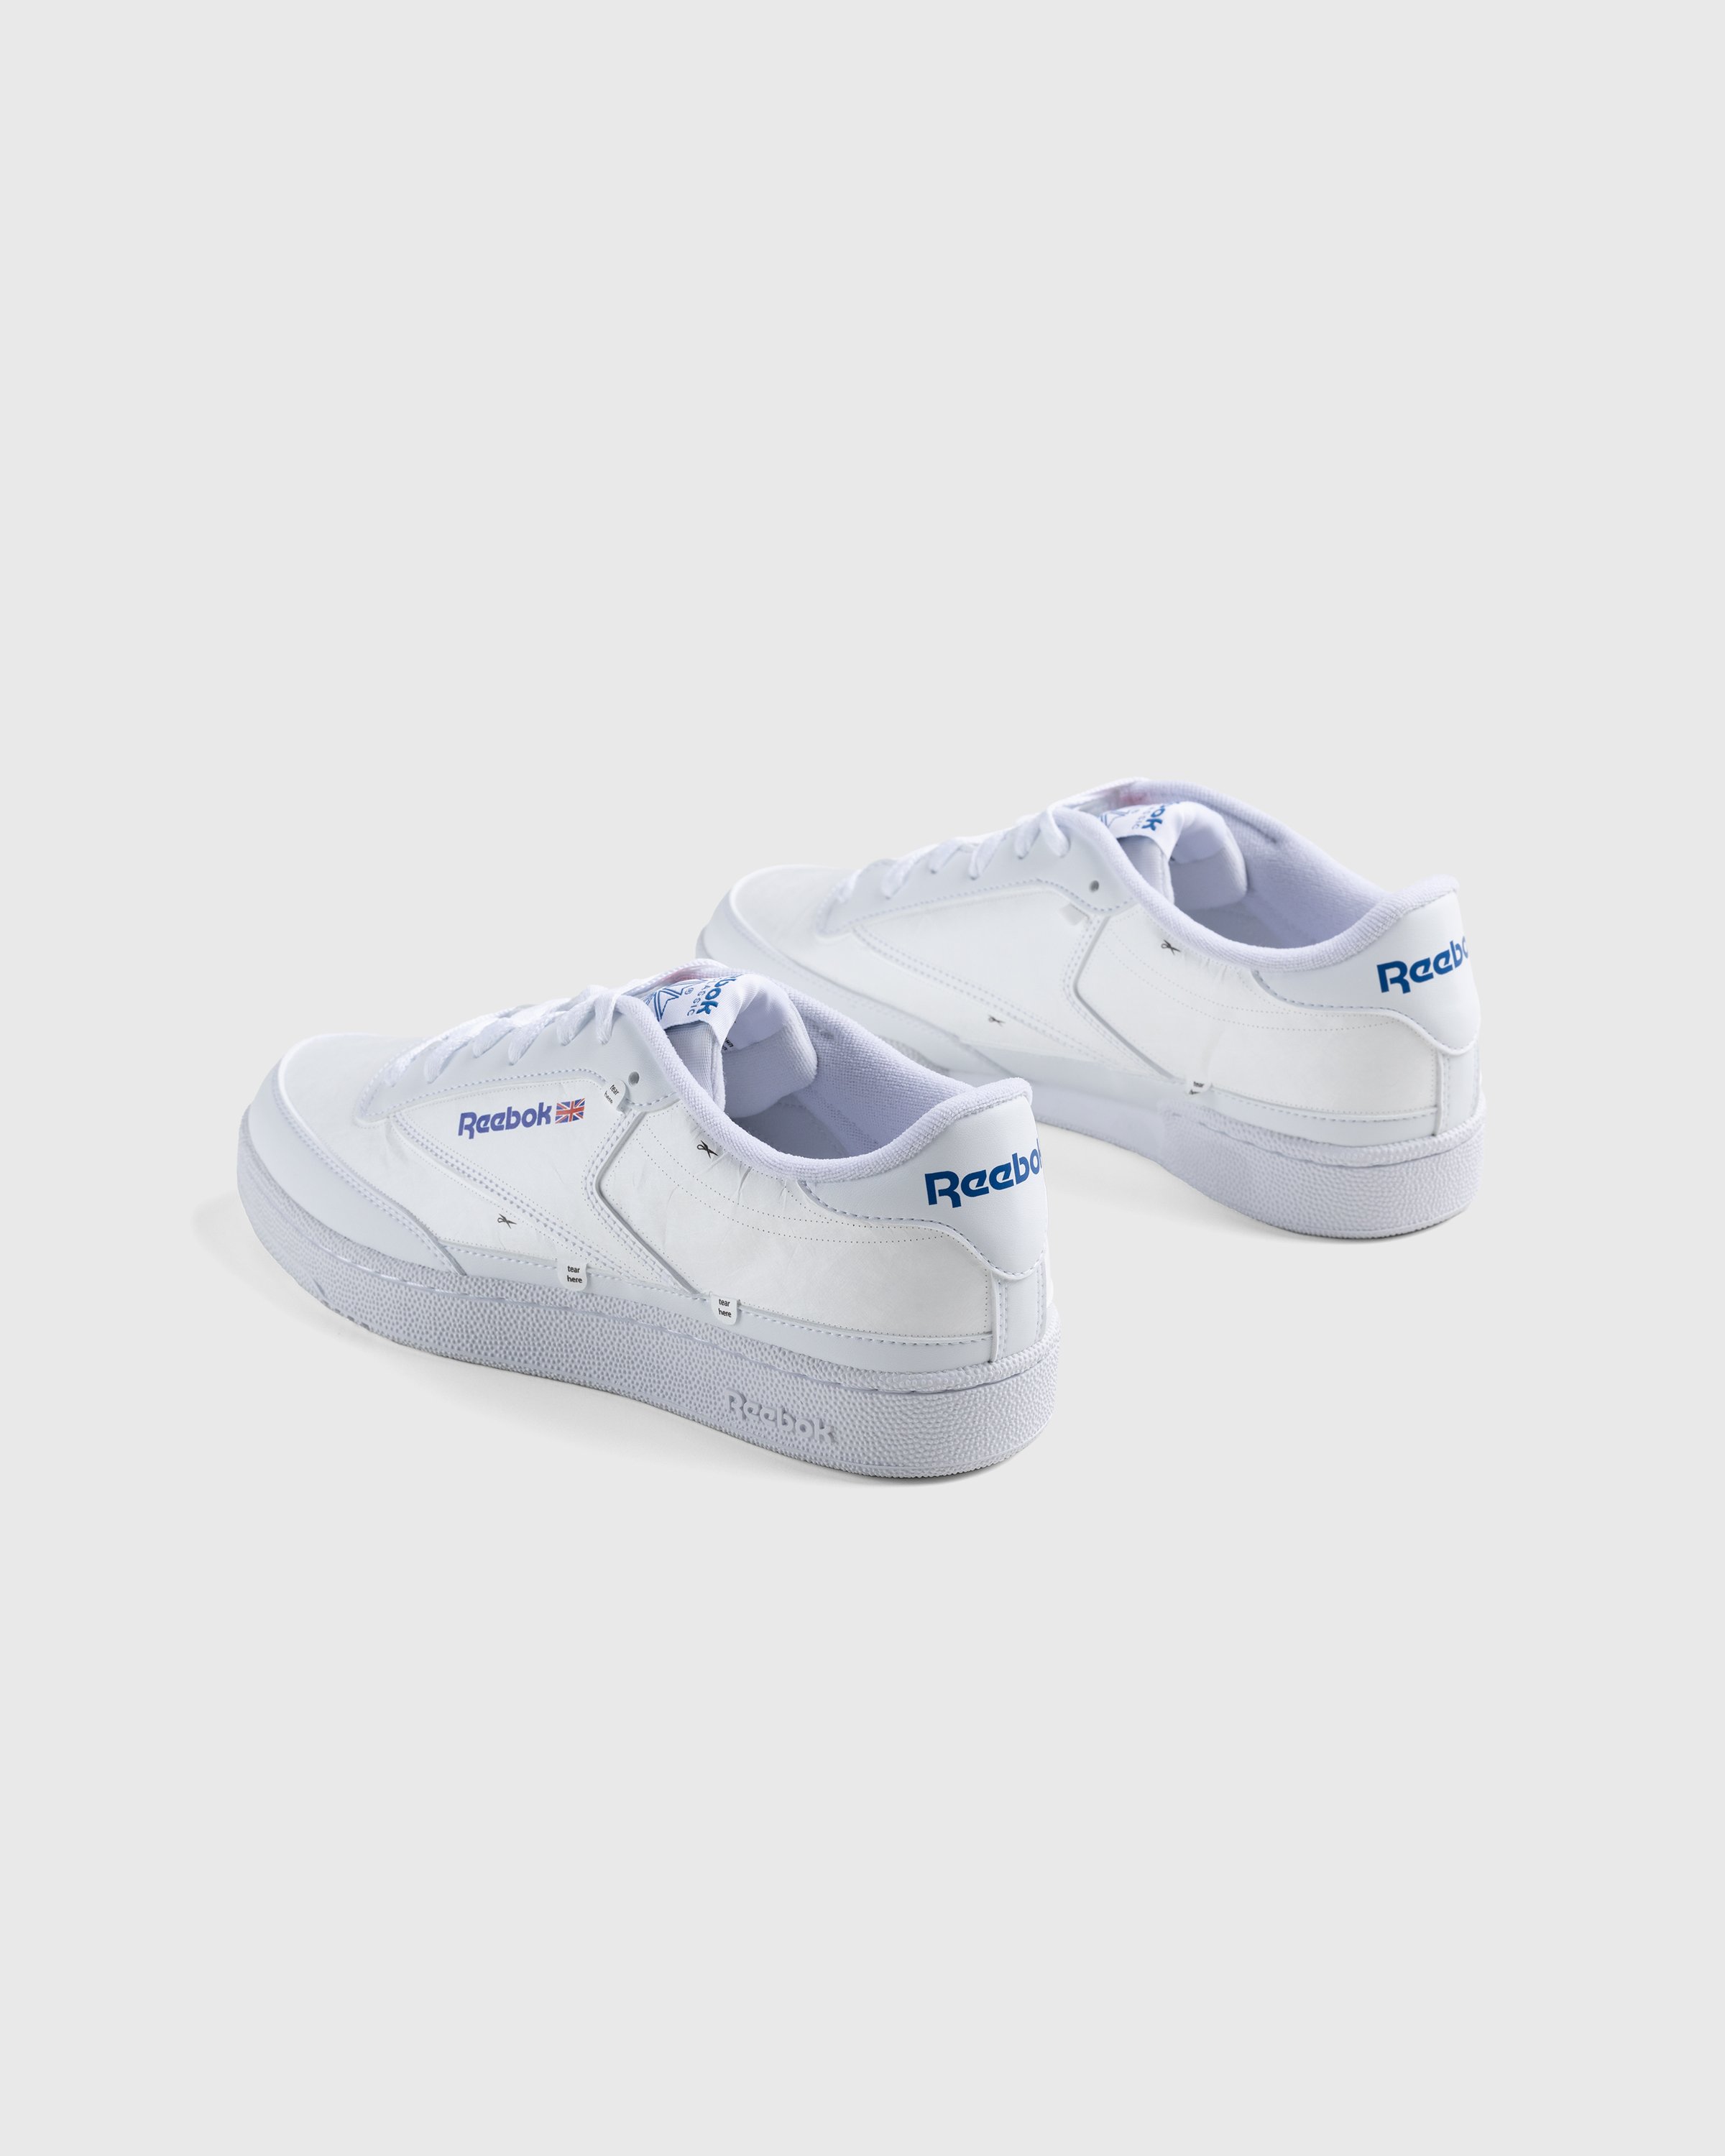 Reebok - Club C 85 x U White - Footwear - White - Image 4